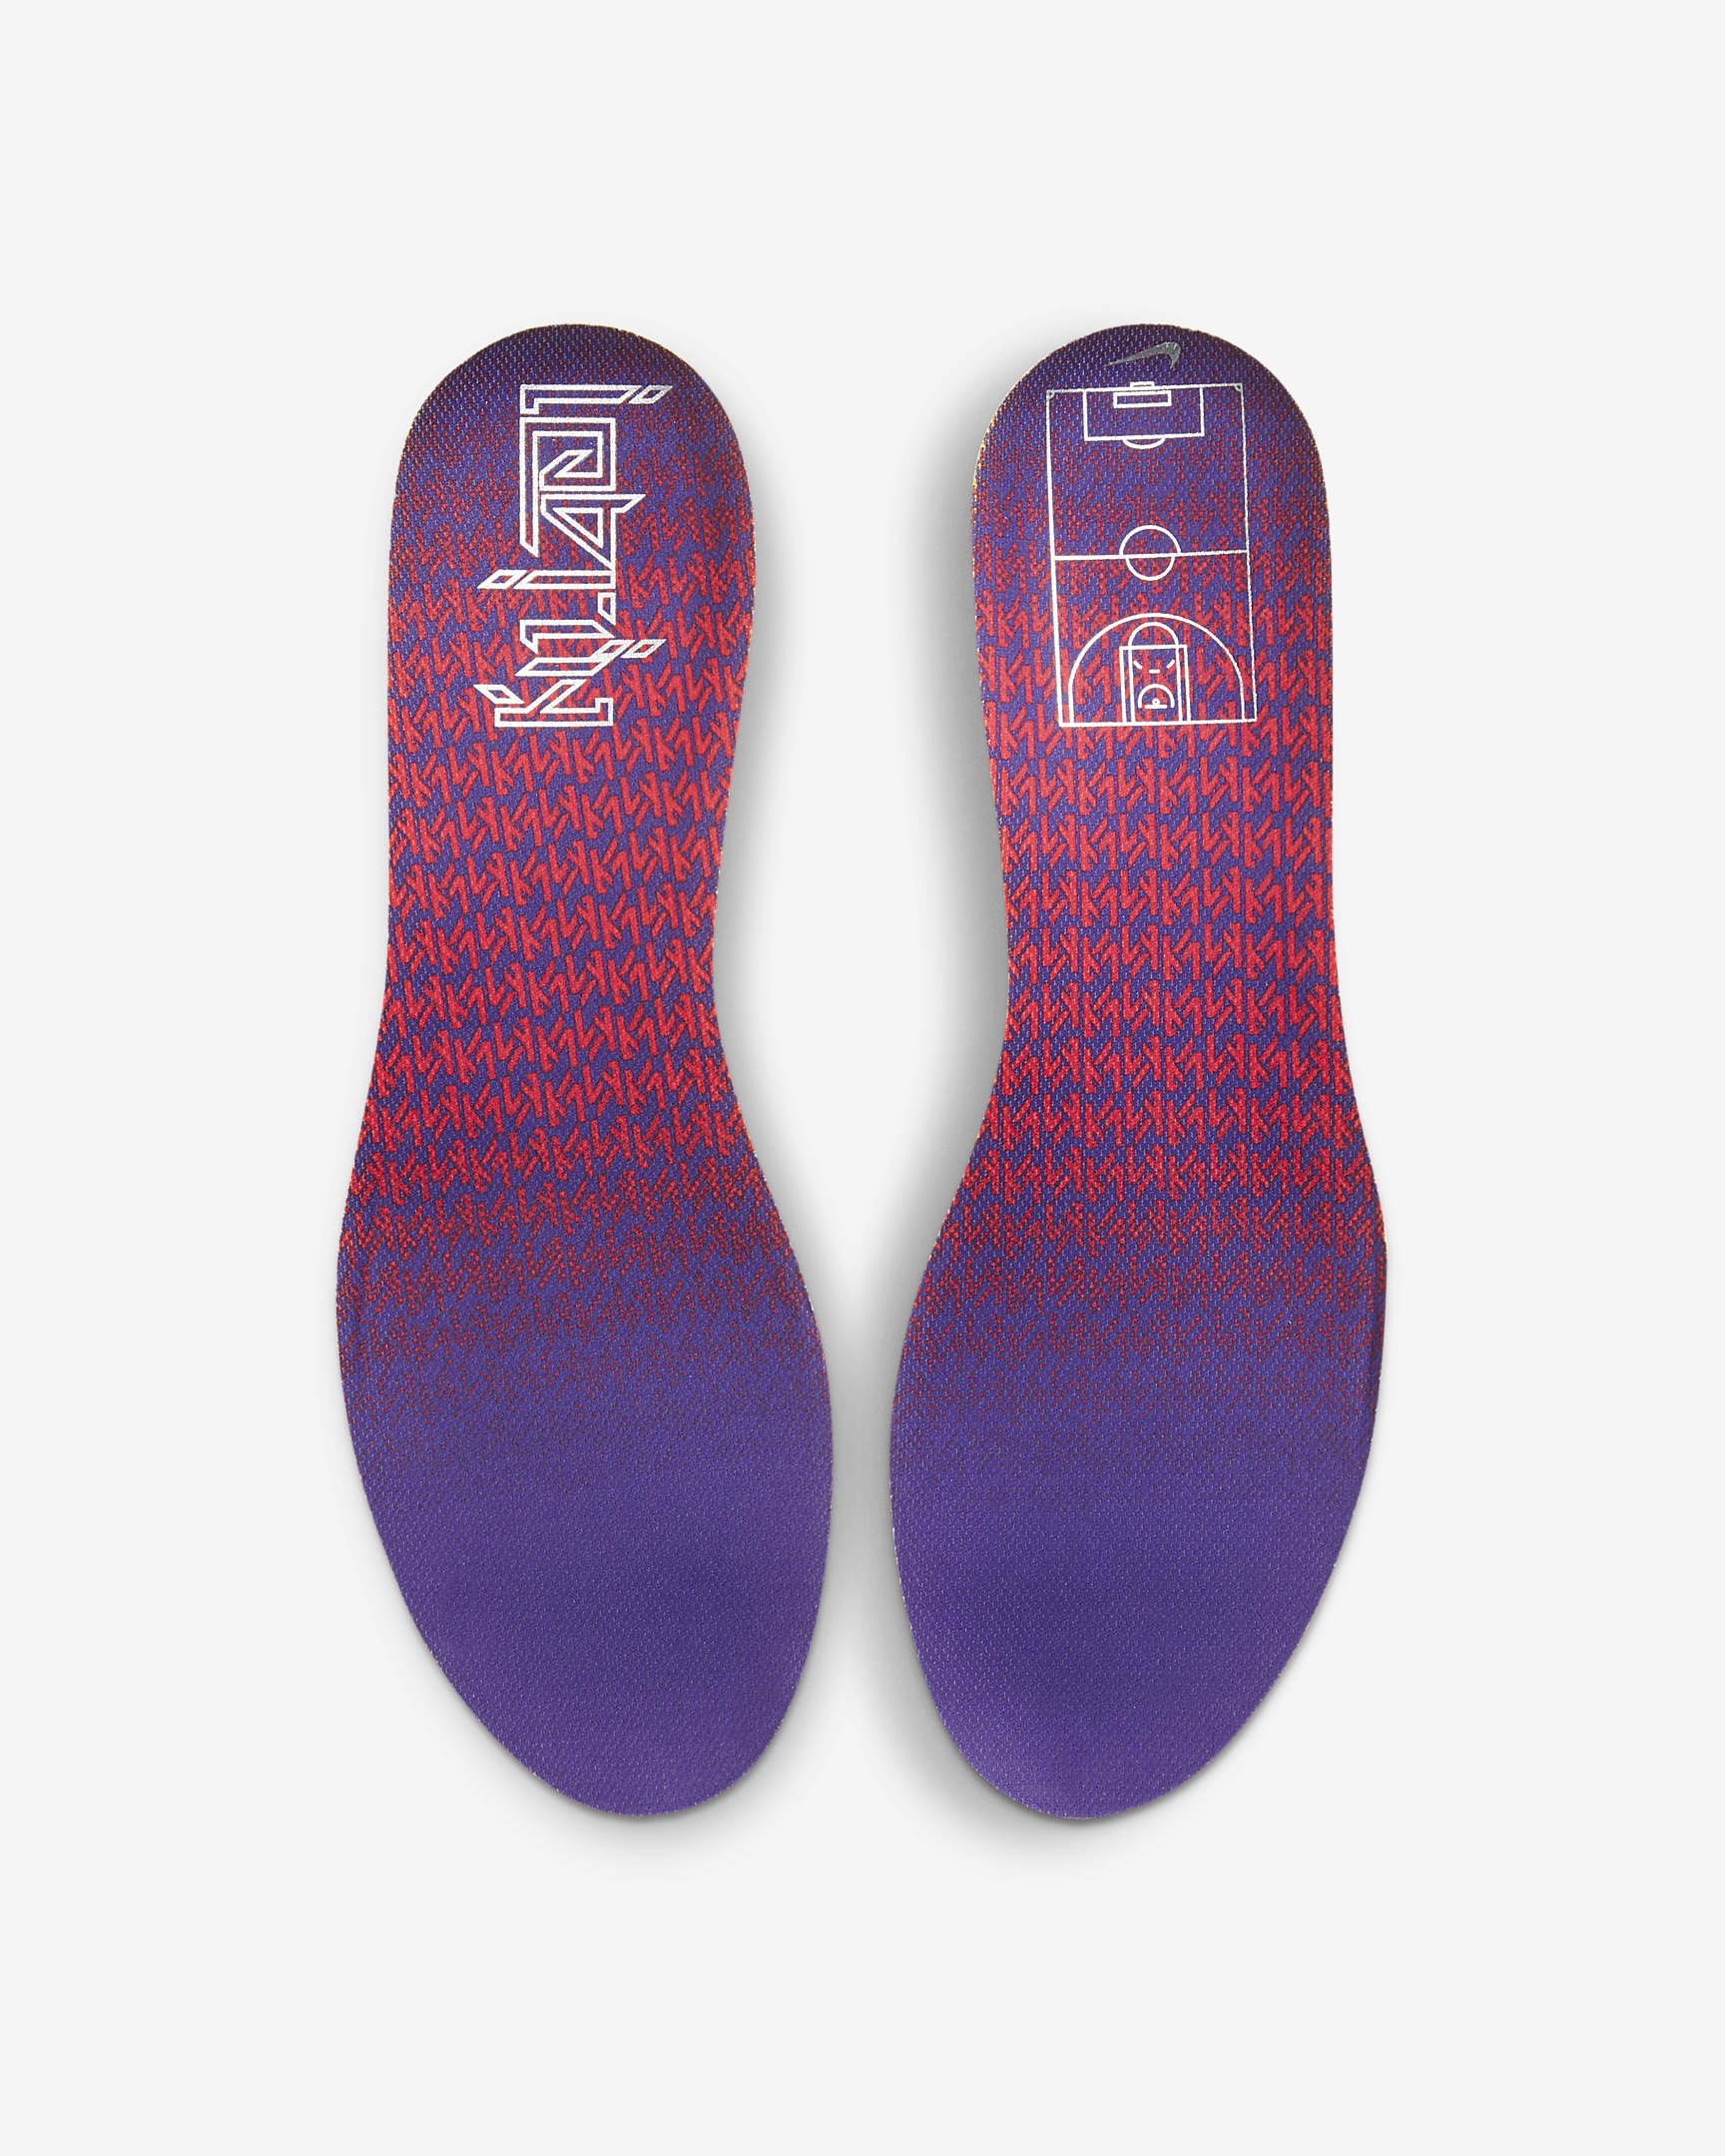 Nike Mercurial Mbappé Superfly 7 Chosen 2 Elite FG Firm-Ground Football Boot - Black/Fierce Purple/Metallic Silver/Flash Crimson